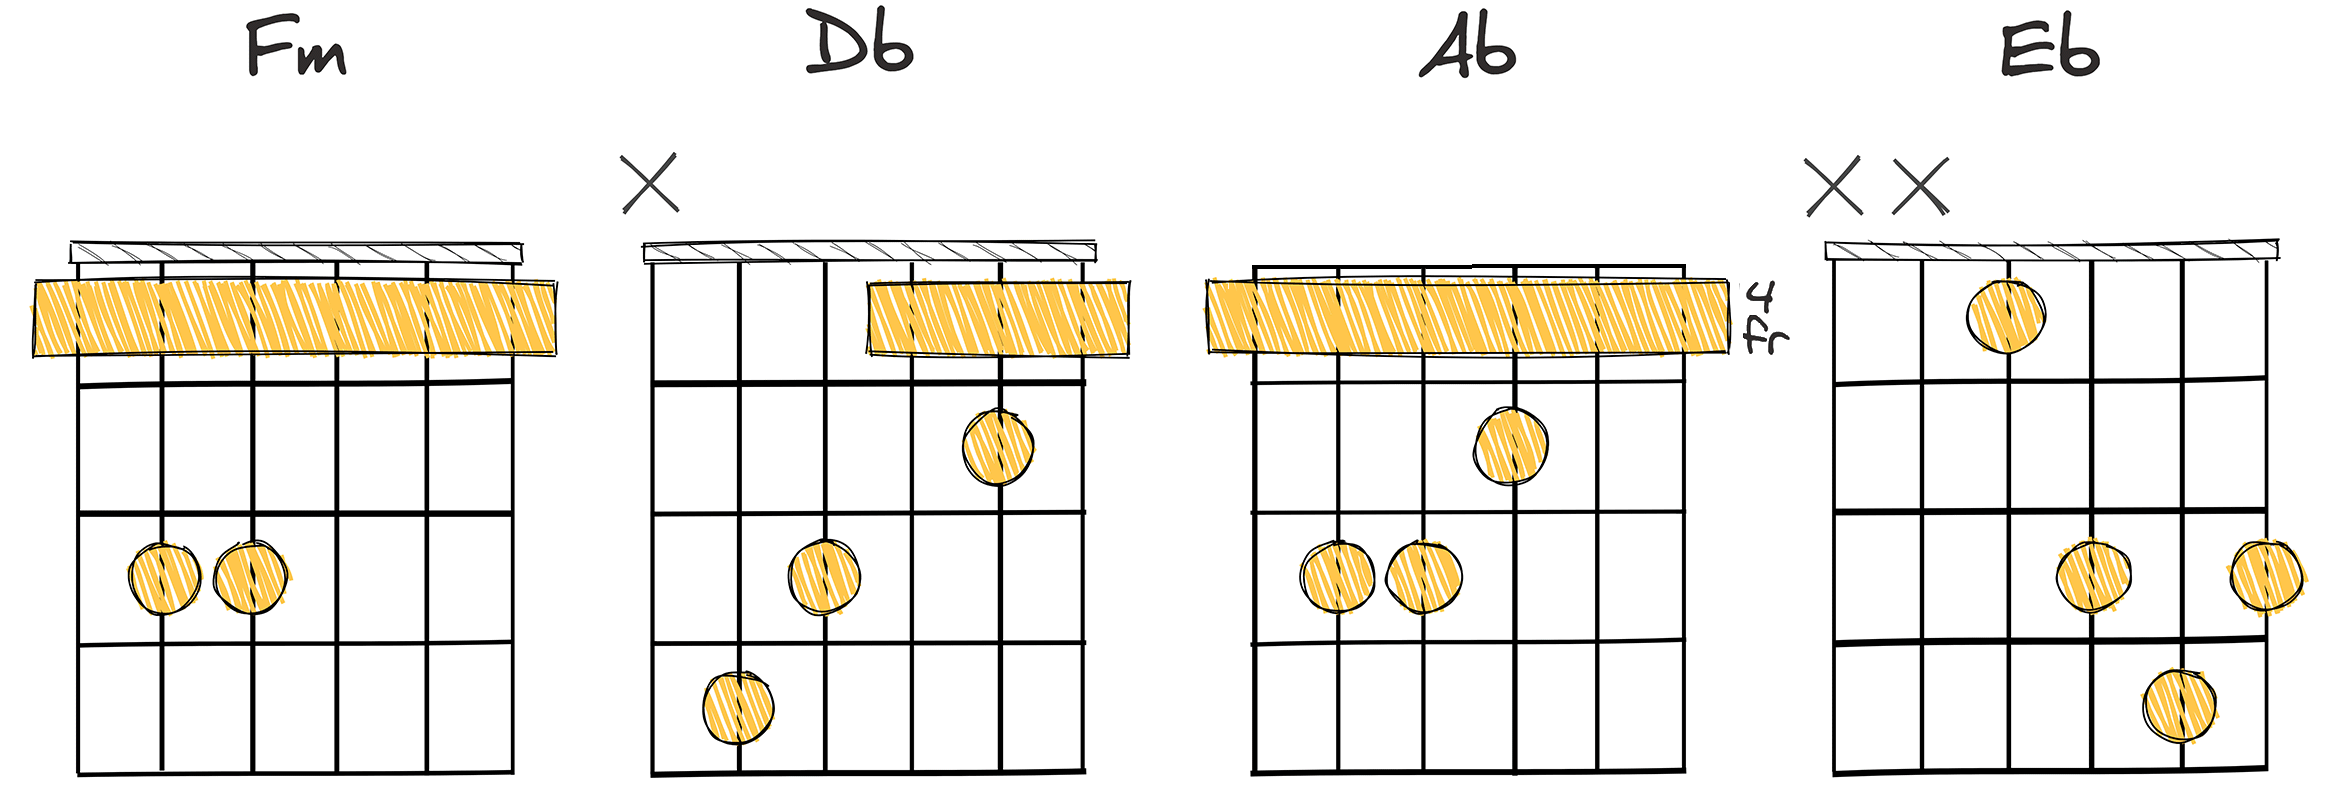 VI-IV-I-V (6-4-1-5) chords diagram